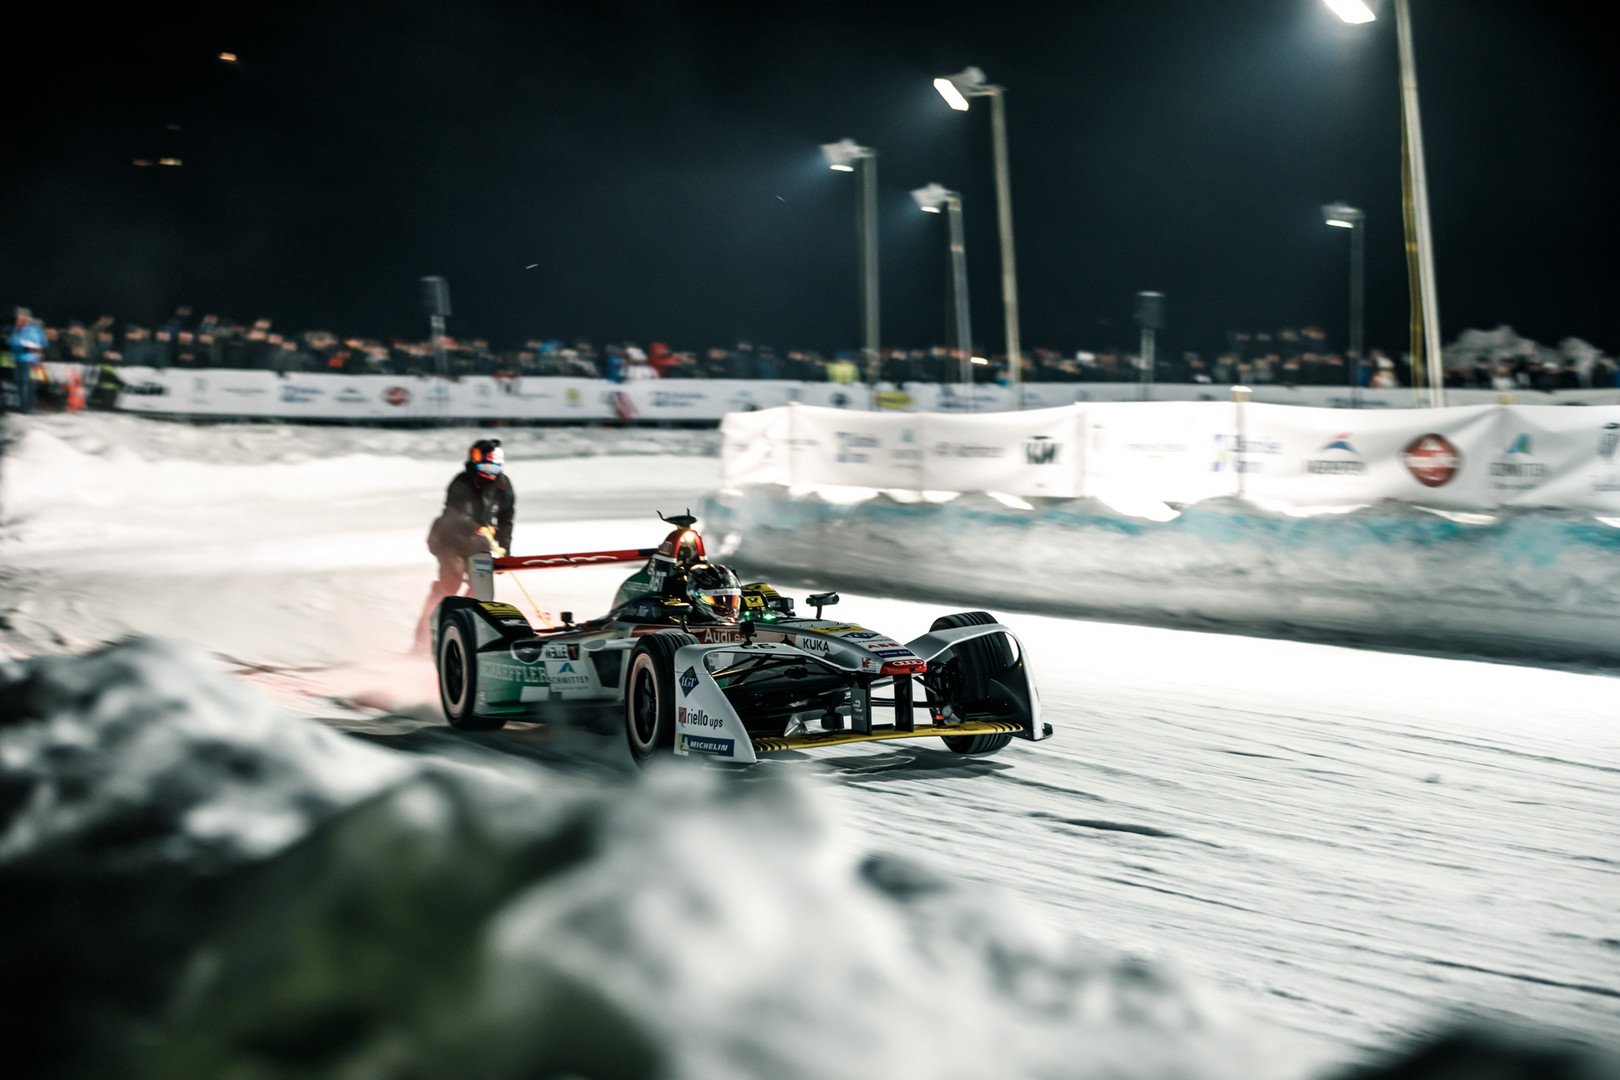 GP Ice Race 2019